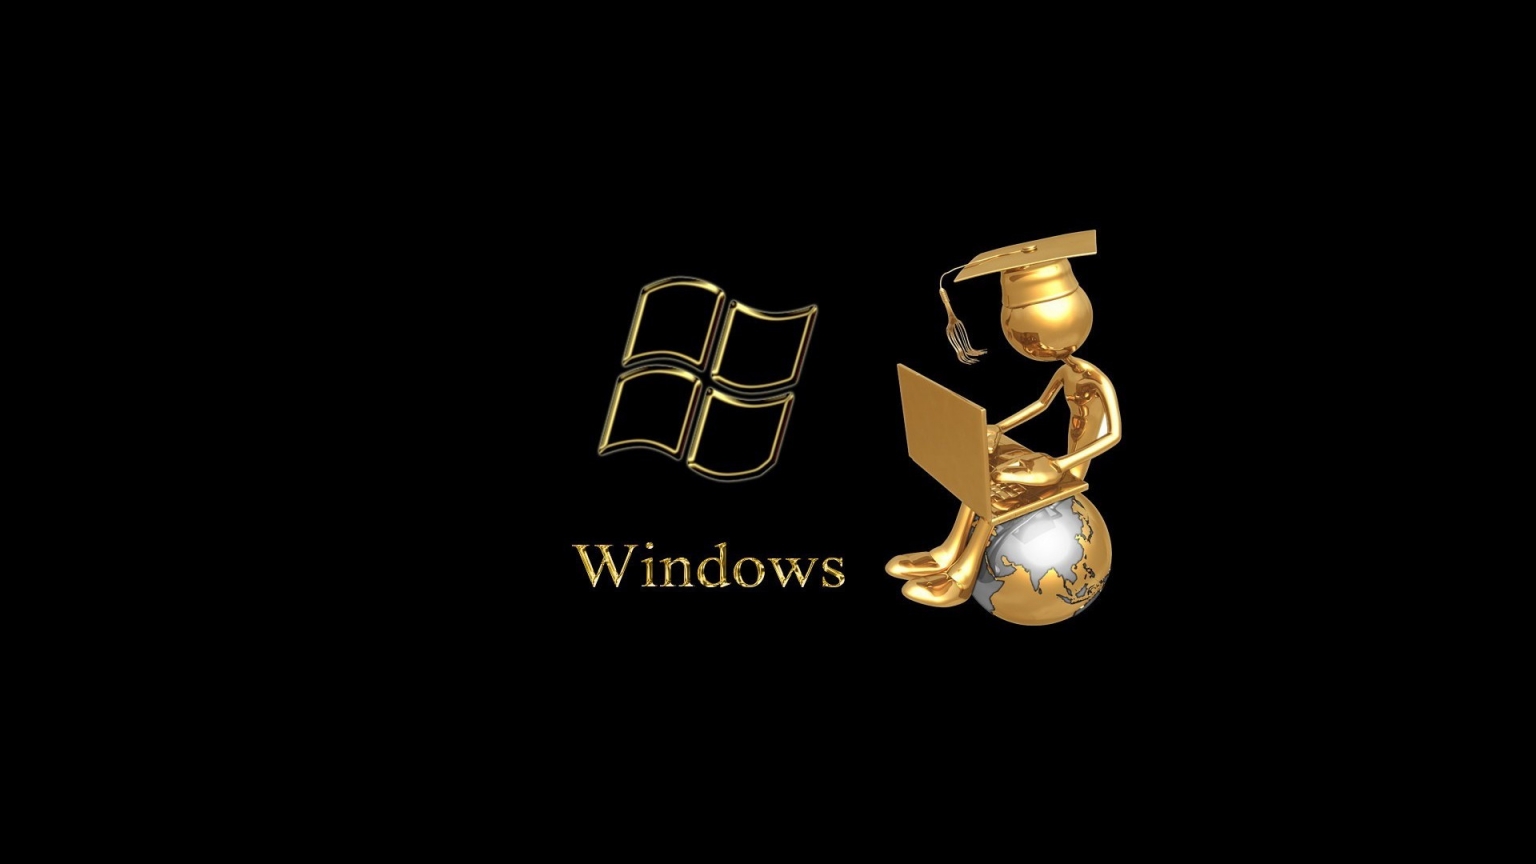 Windows Gold for 1536 x 864 HDTV resolution